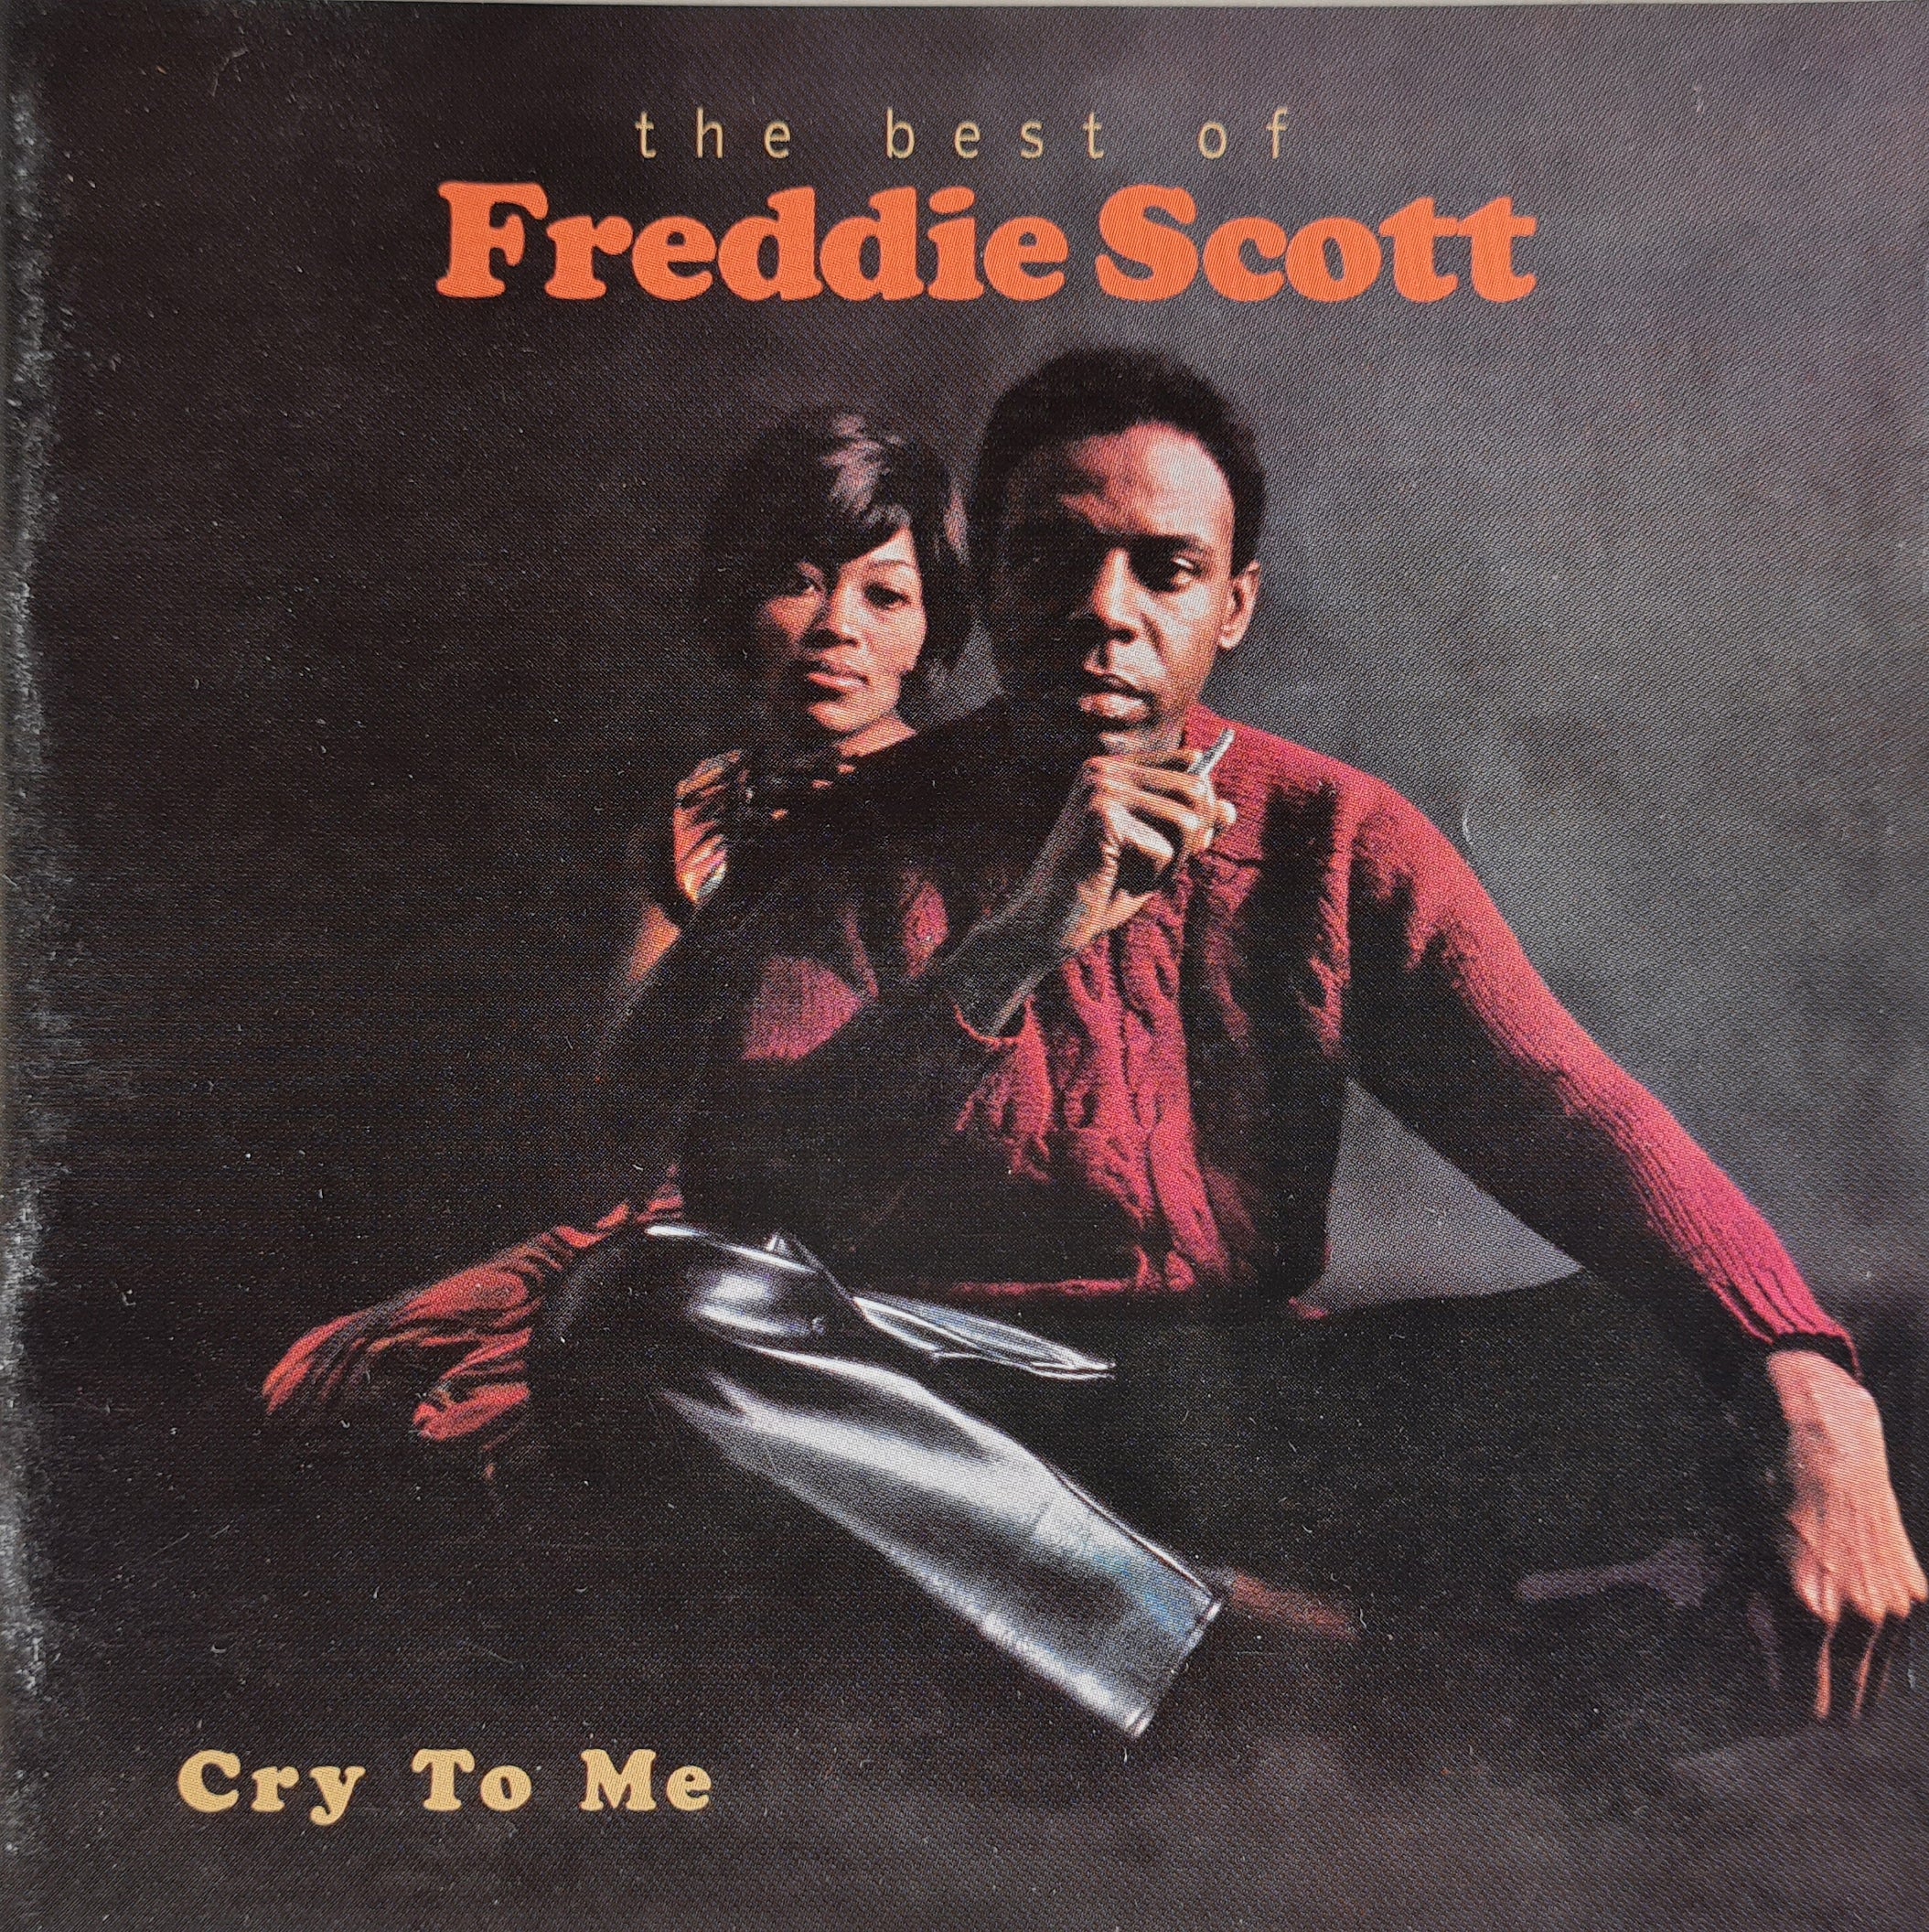 Freddie Scott - The Best of Freddie Scott - Cry to Me (CD)